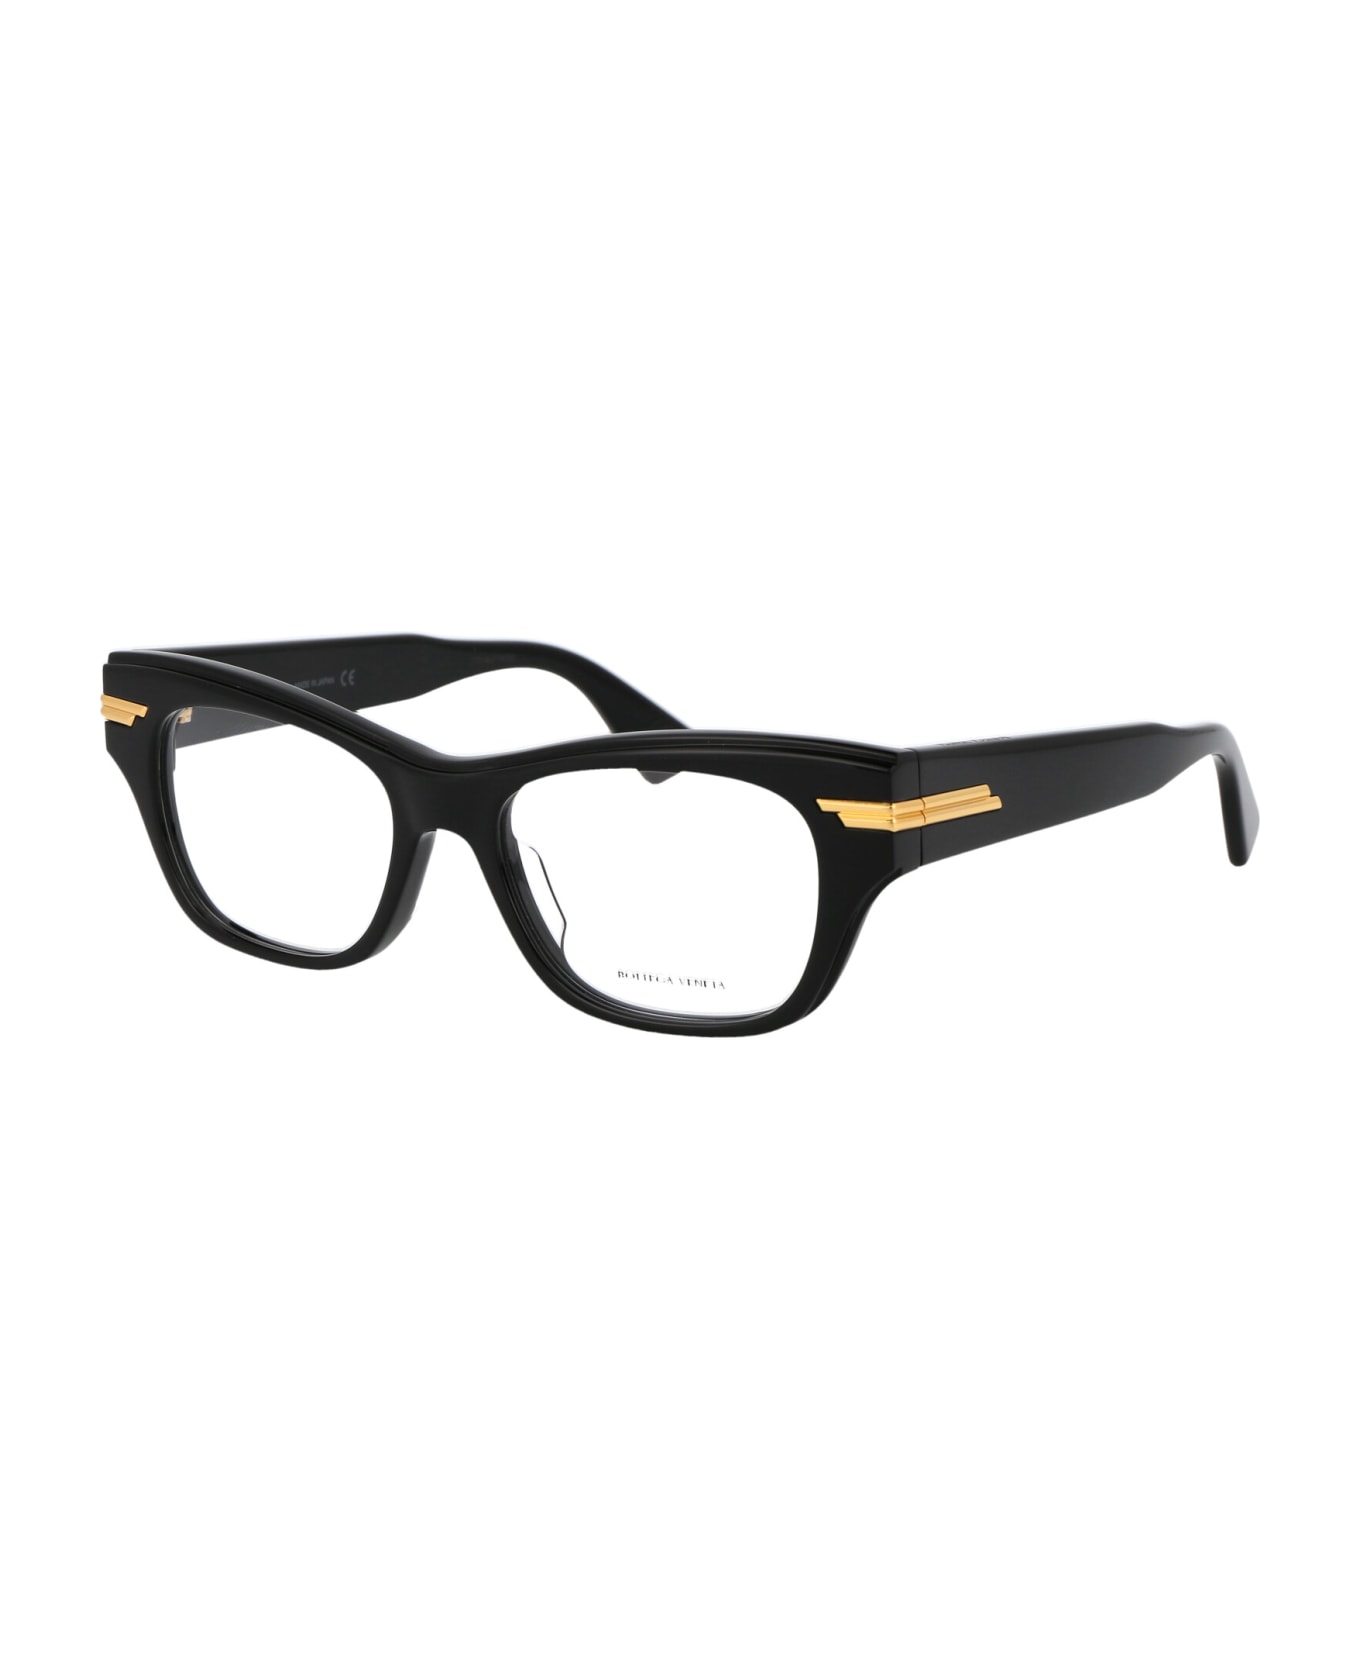 Bottega Veneta Eyewear Bv1152o Glasses - 001 BLACK BLACK TRANSPARENT